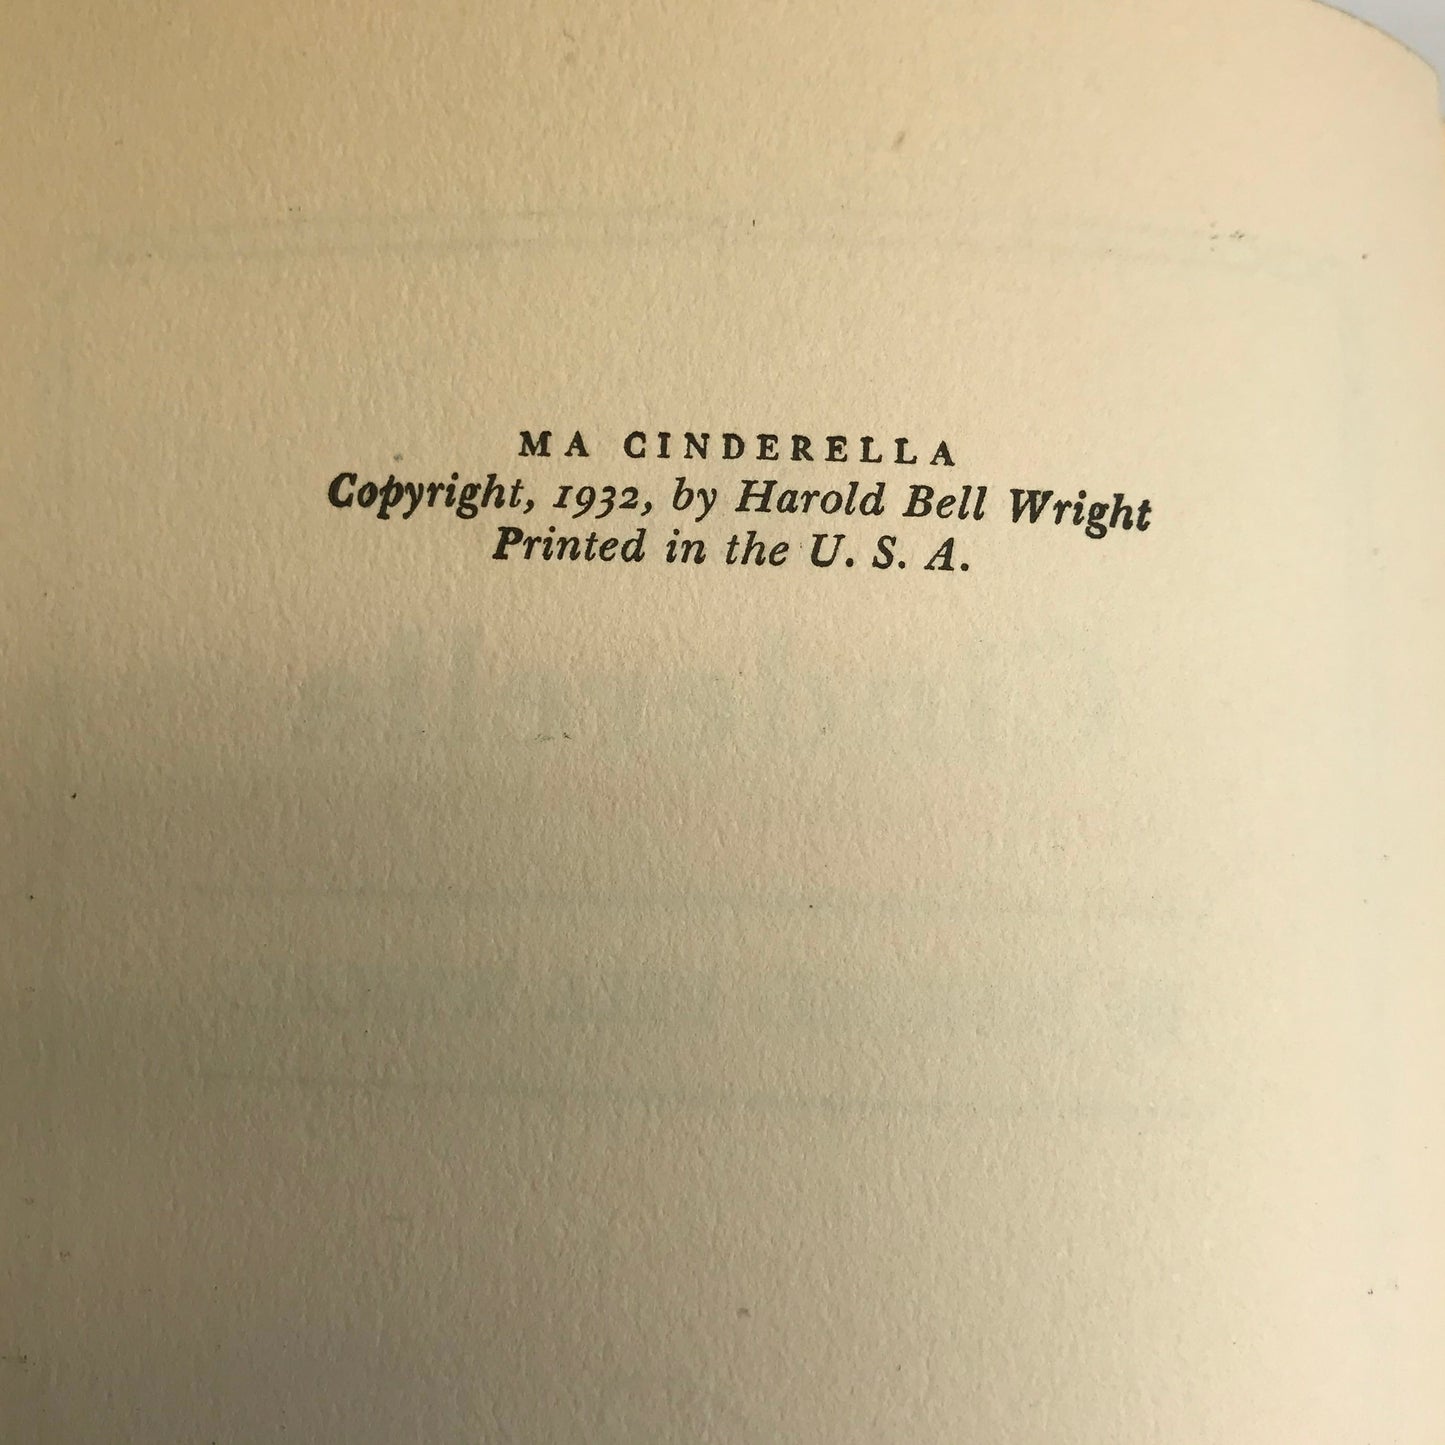 Ma Cinderella - Harold Bell Wright